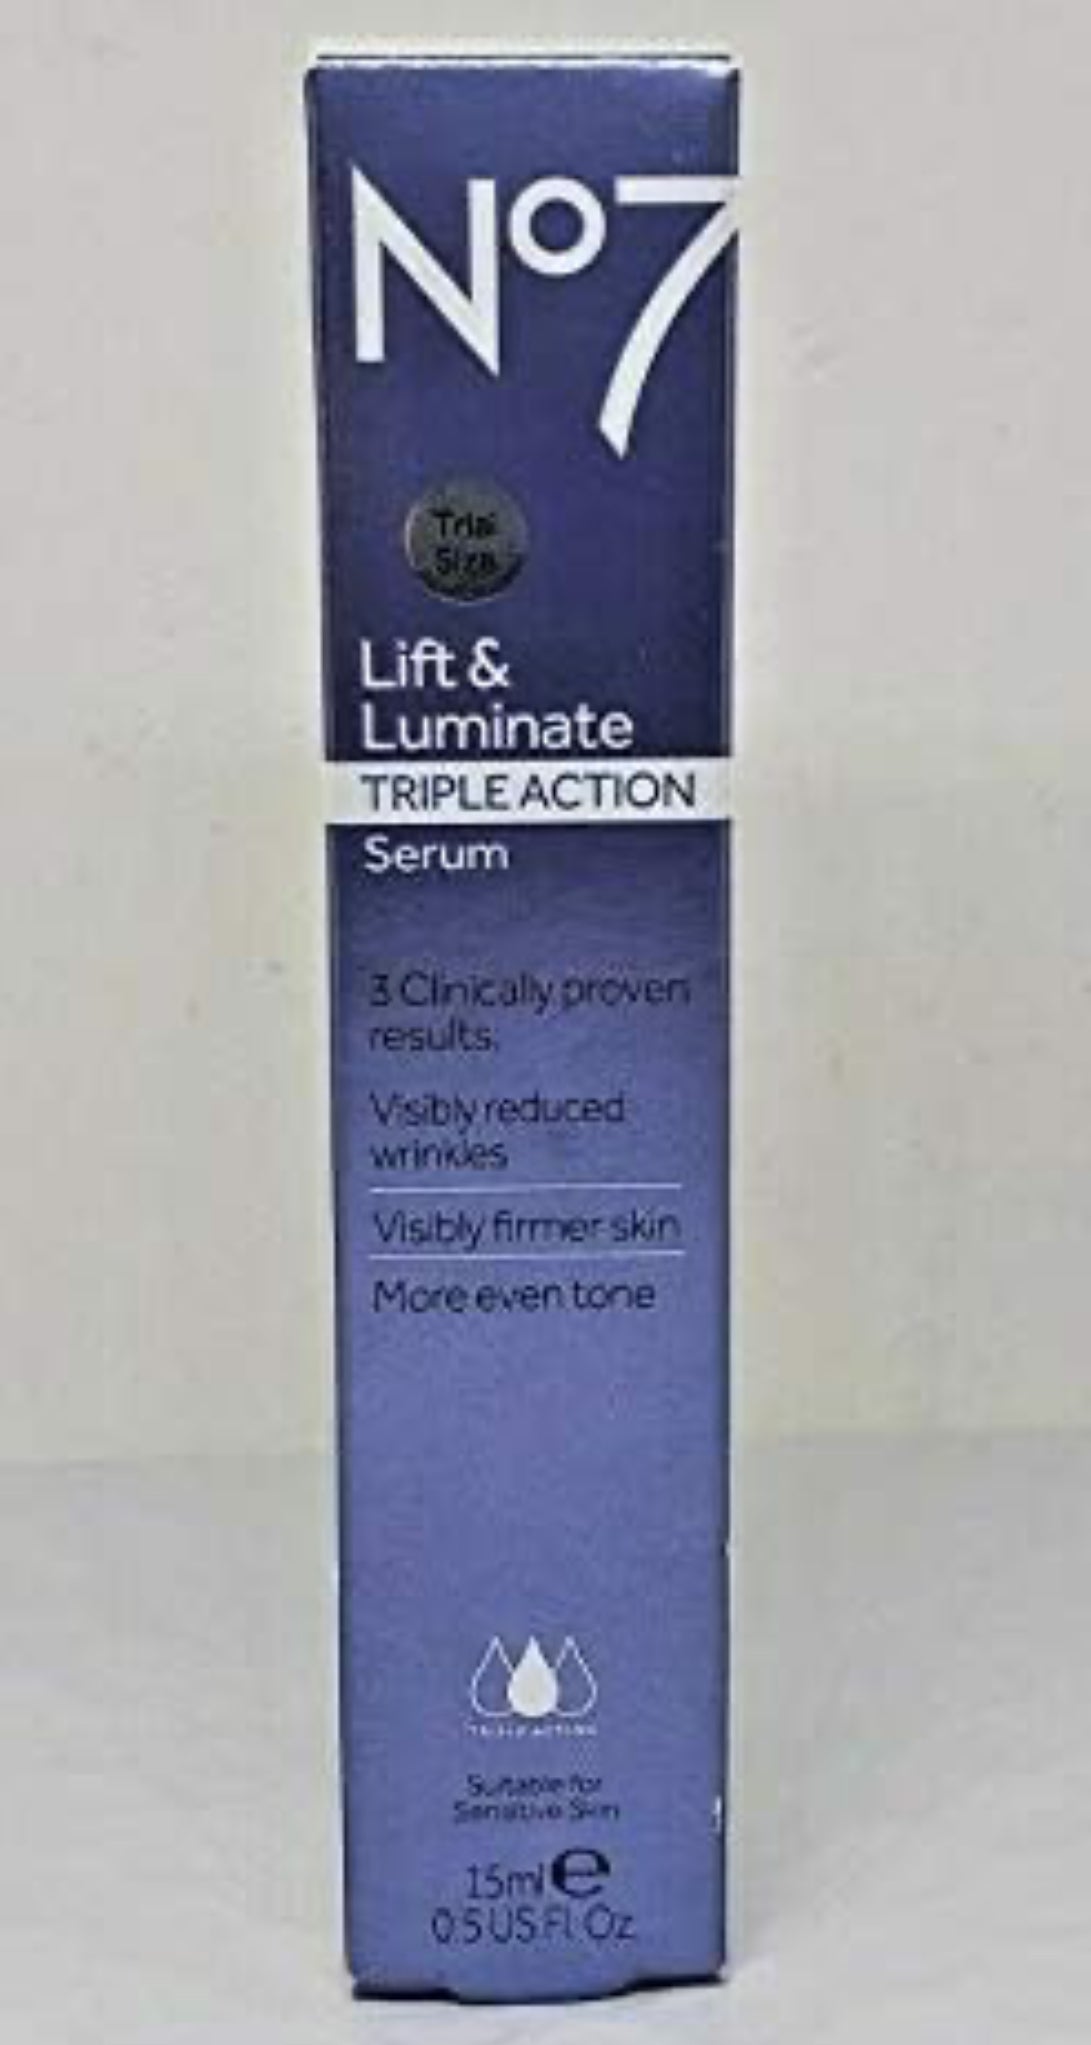 No7 Lift & Luminate Triple Action Serum